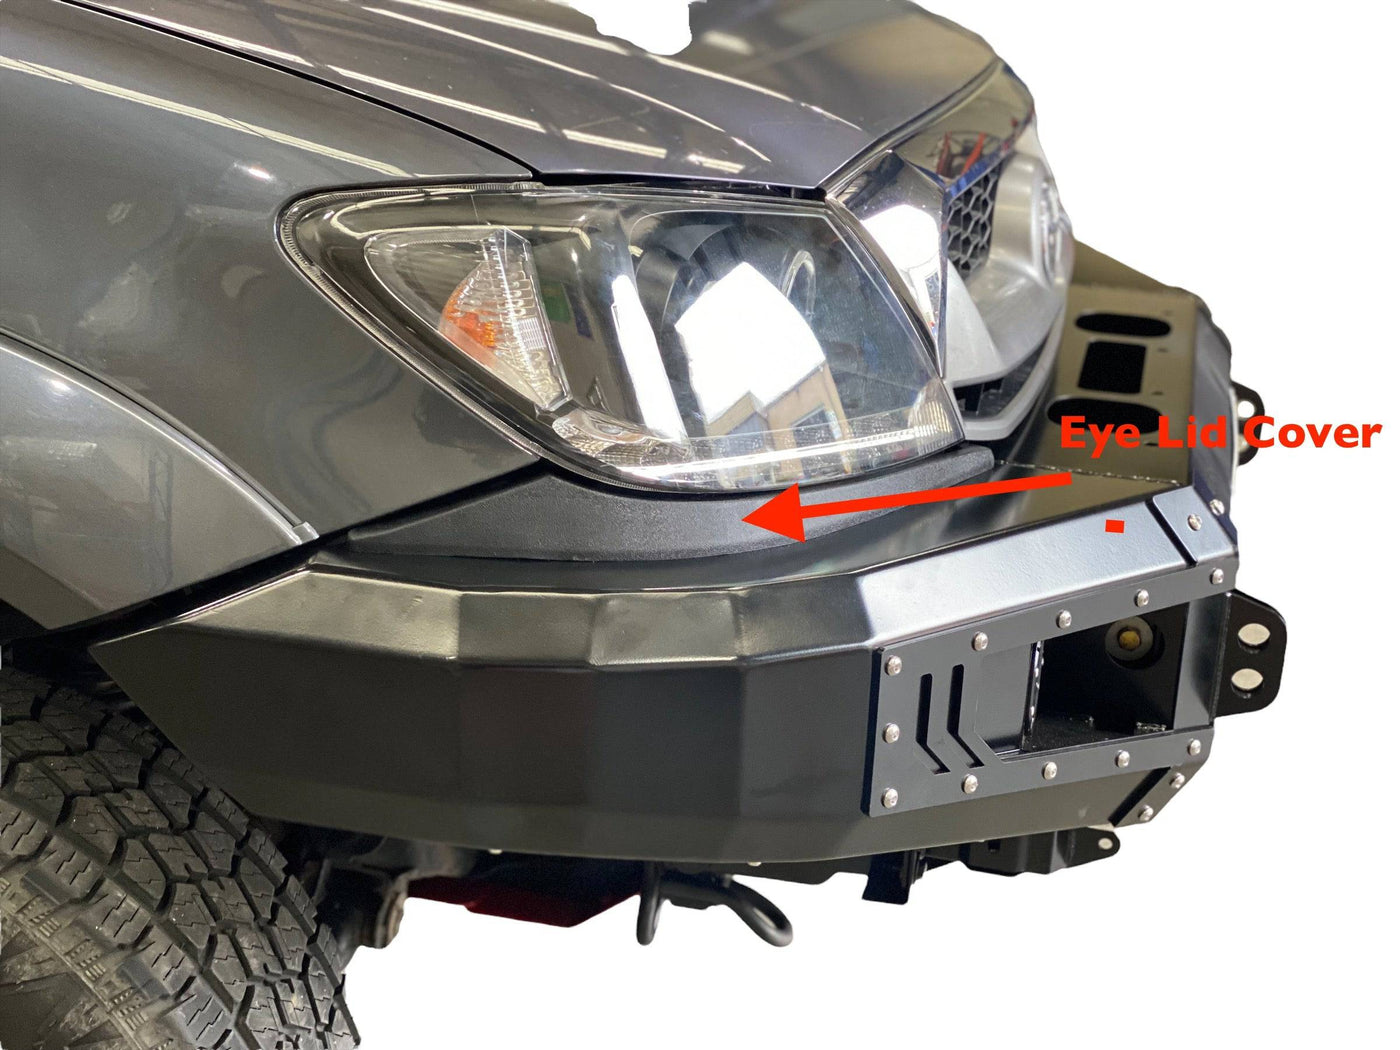 Pair of Eye Lid Covers Suits Toyota Hilux 2012 - 2014 Steel Bullbars